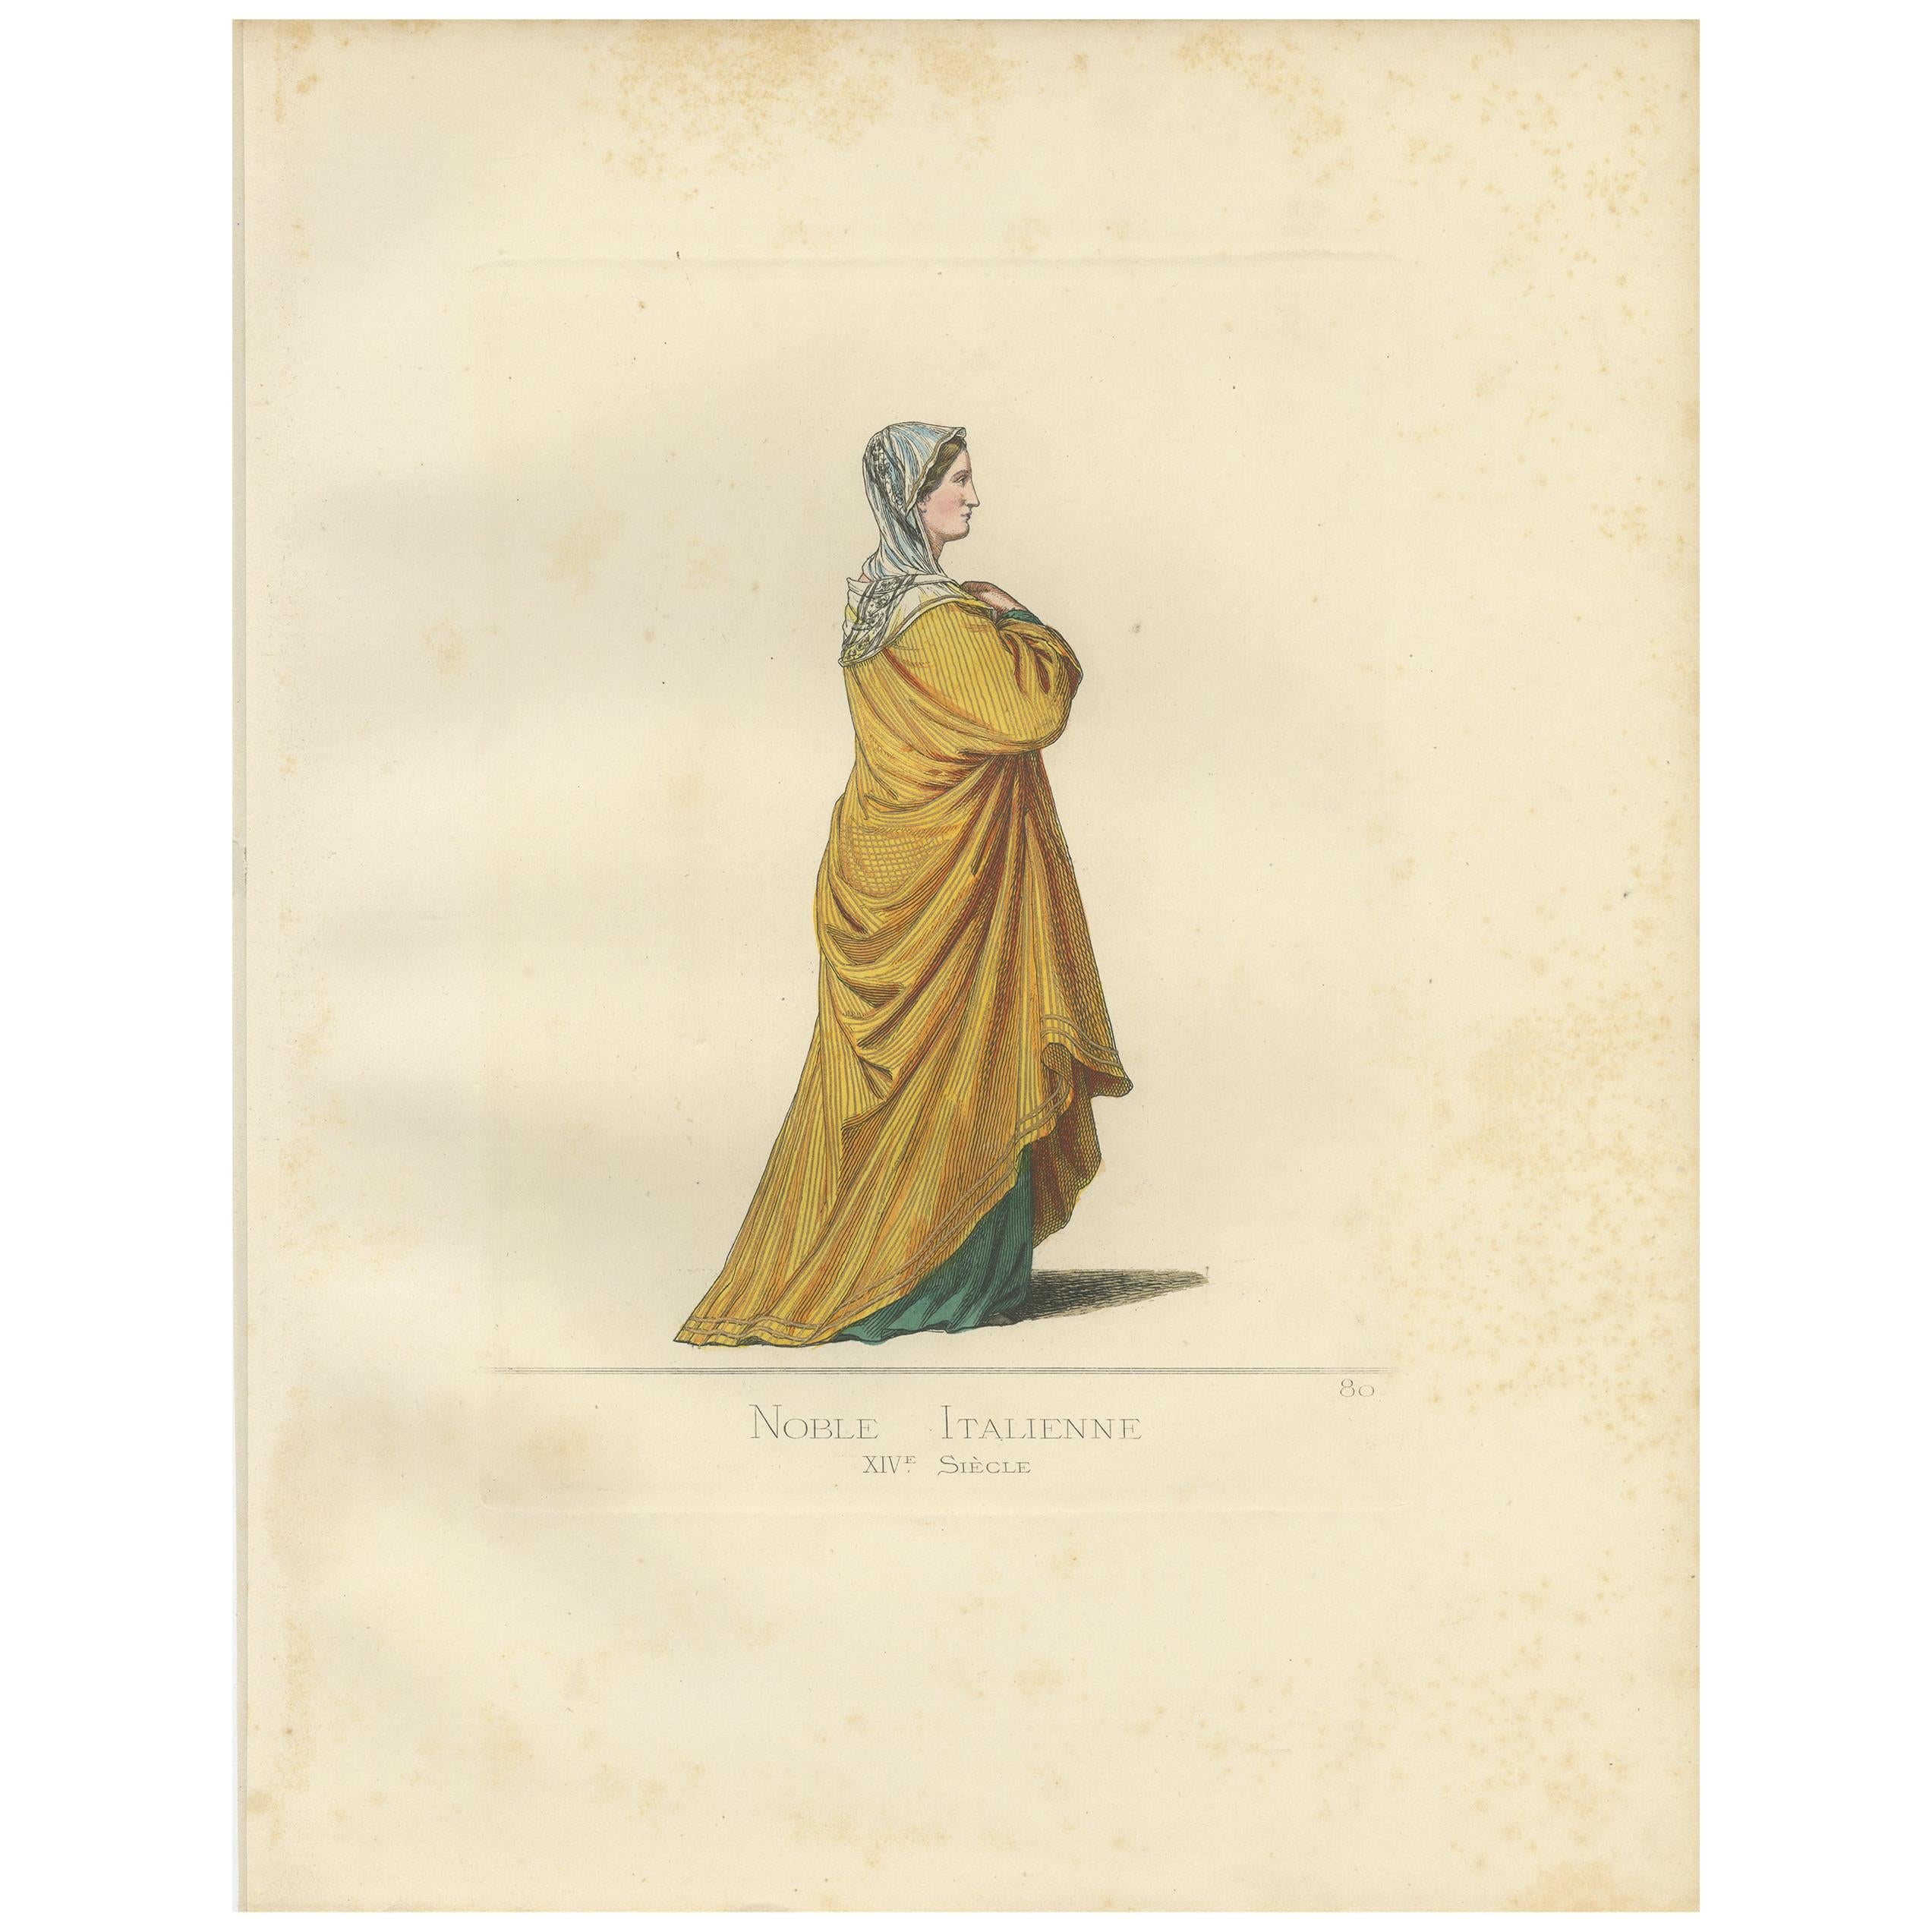 Antique Print of a 14th Century Italian Noblewoman by Bonnard, 1860